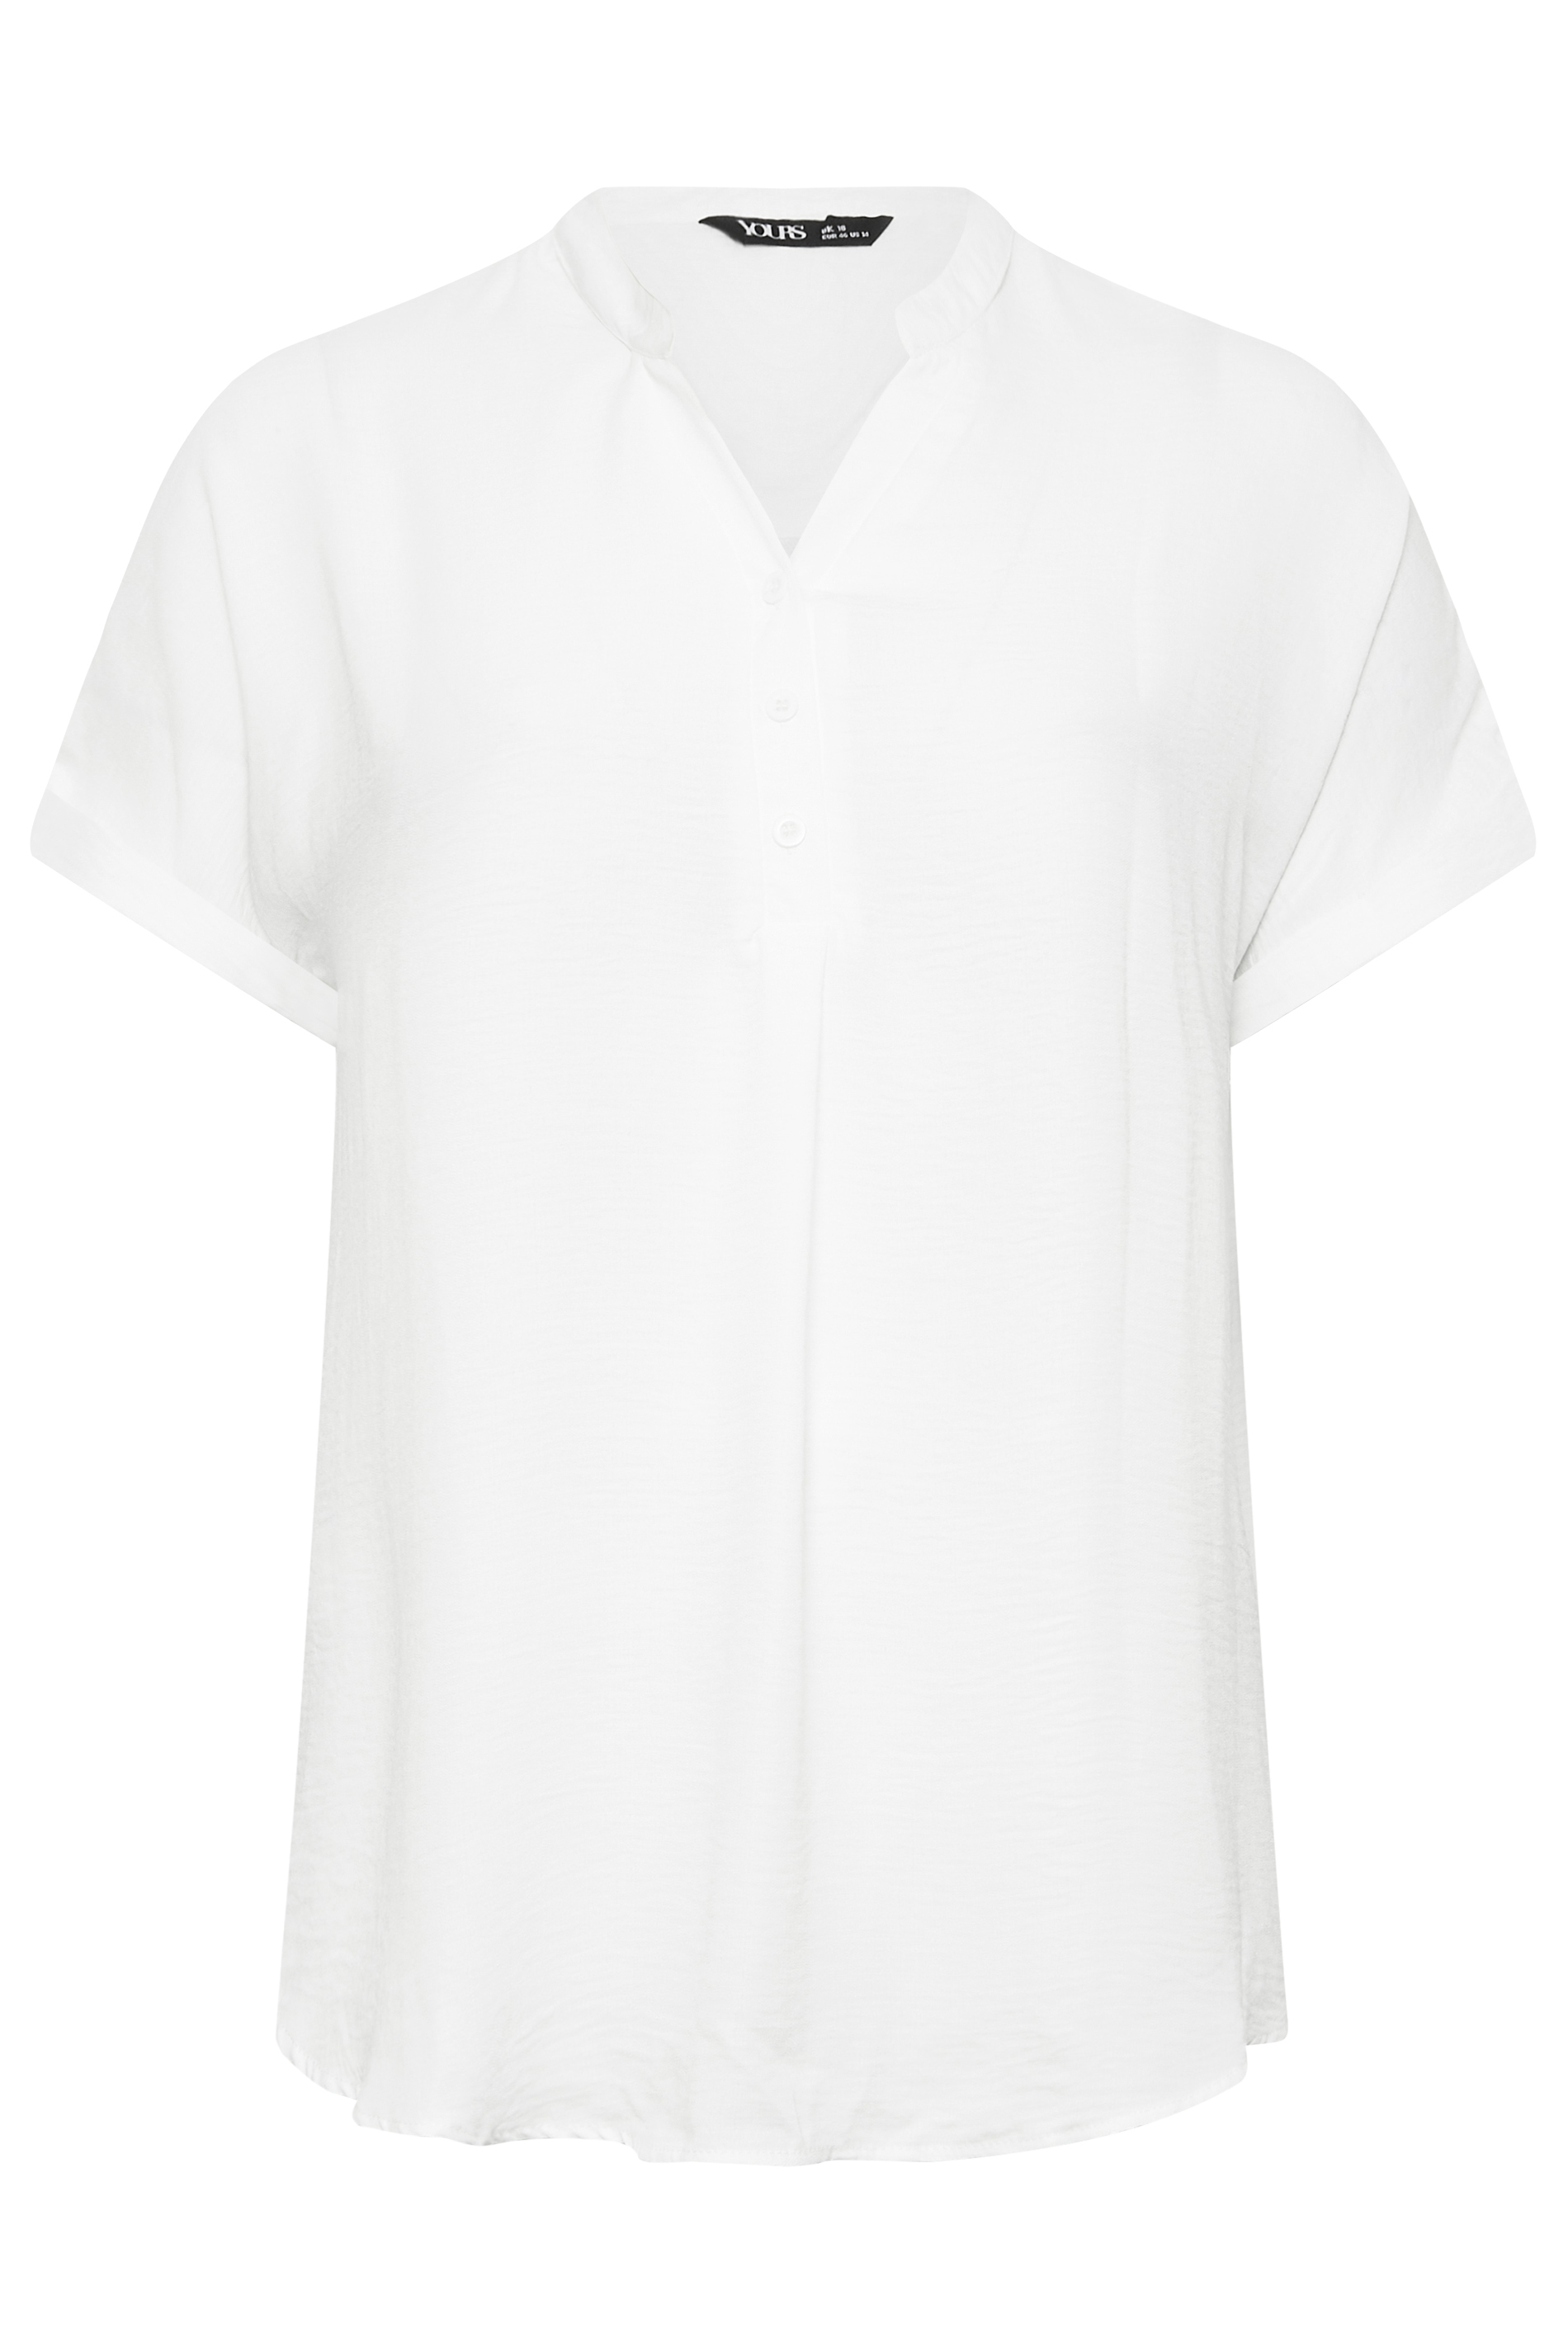 YOURS Plus Size White Half Placket Short Sleeve Blouse | Yours Clothing